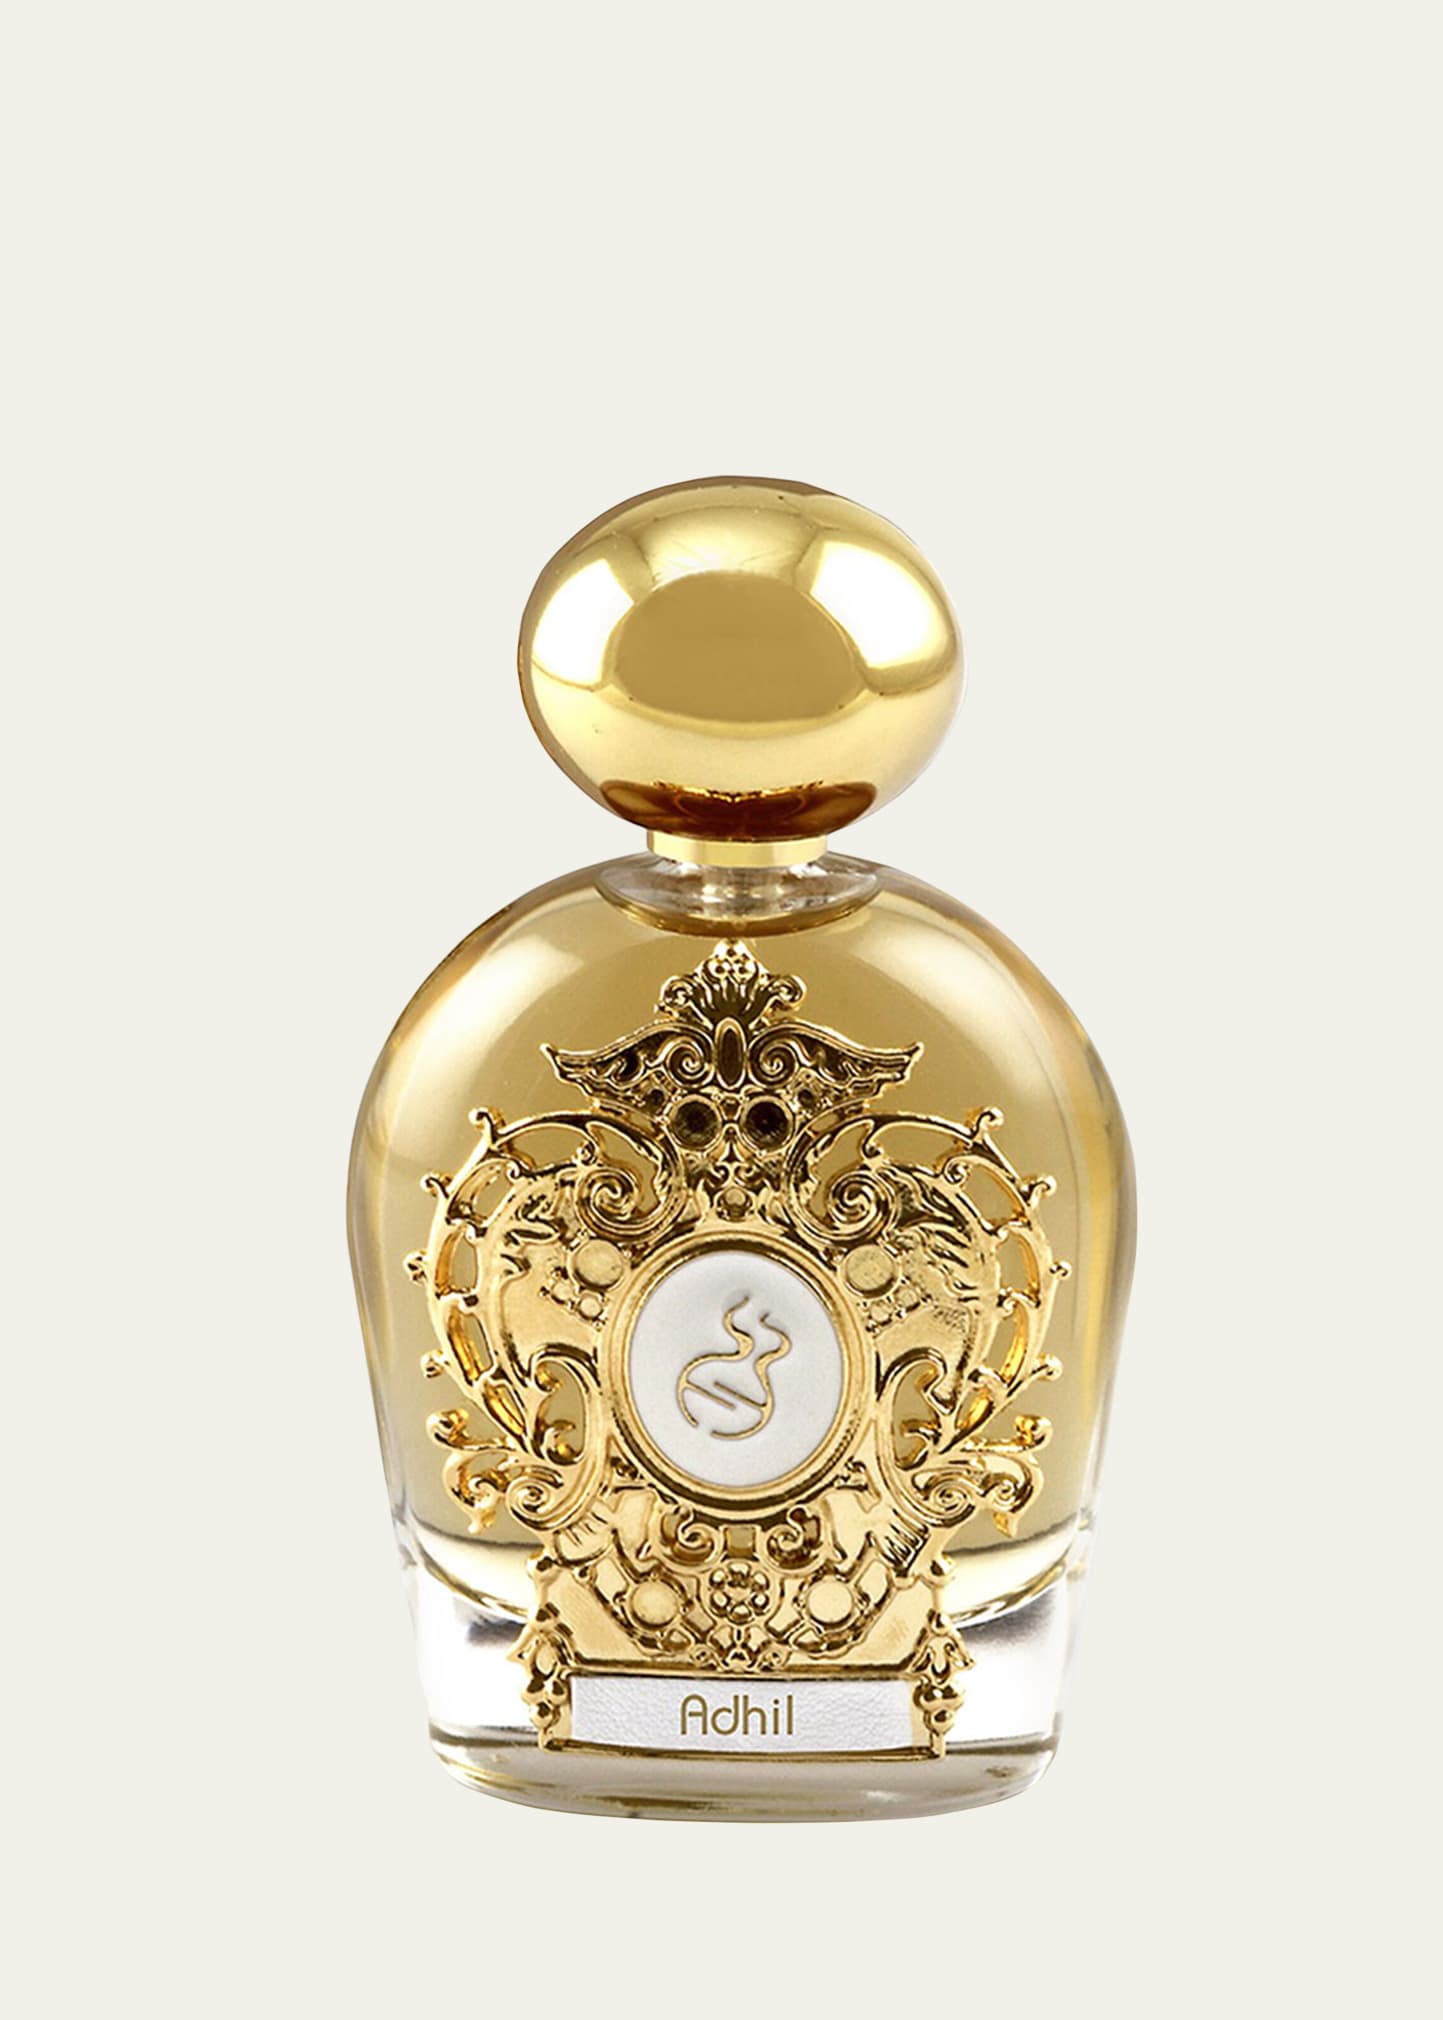 Adhil Assoluto Extrait de Parfum, 3.4 oz.